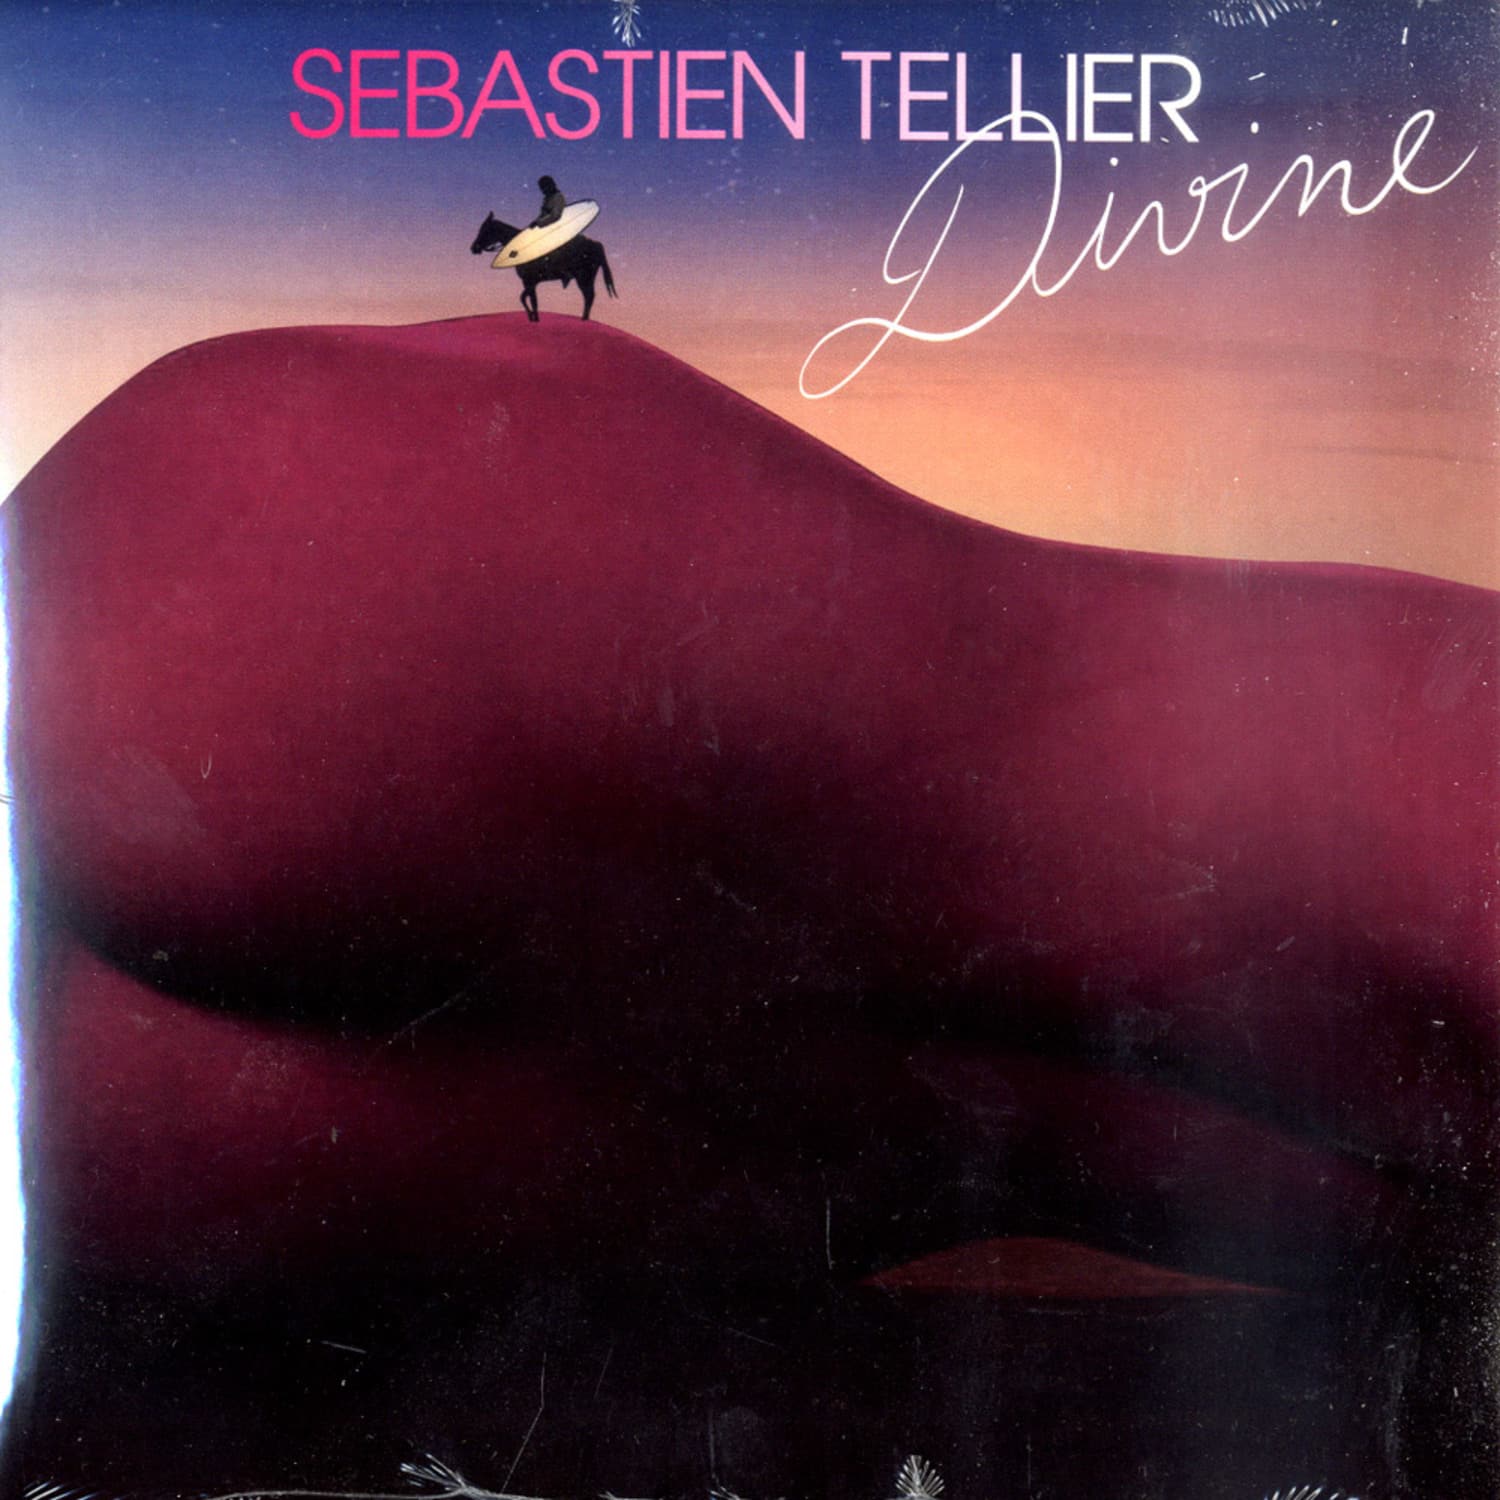 Sebastien Tellier - DIVINE - REMIXES 